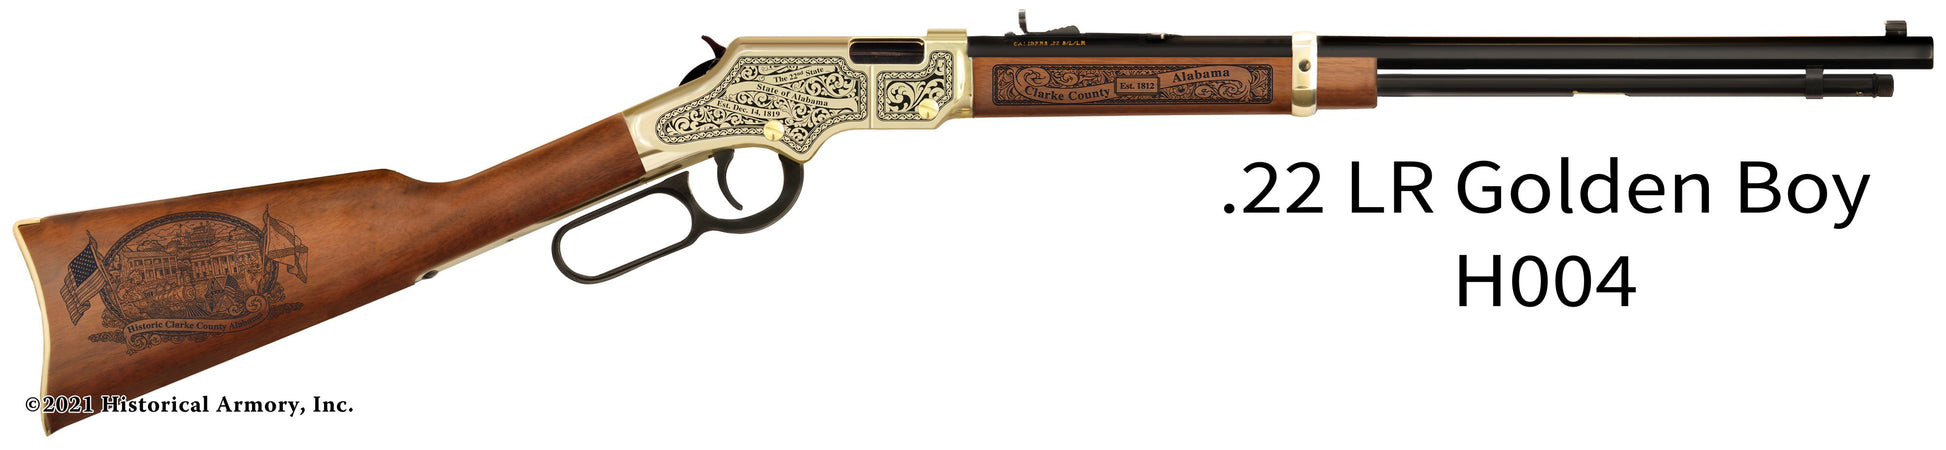 Clarke County Alabama History Engraved  Rifle Henry Golden Boy .22 | Historical Armory